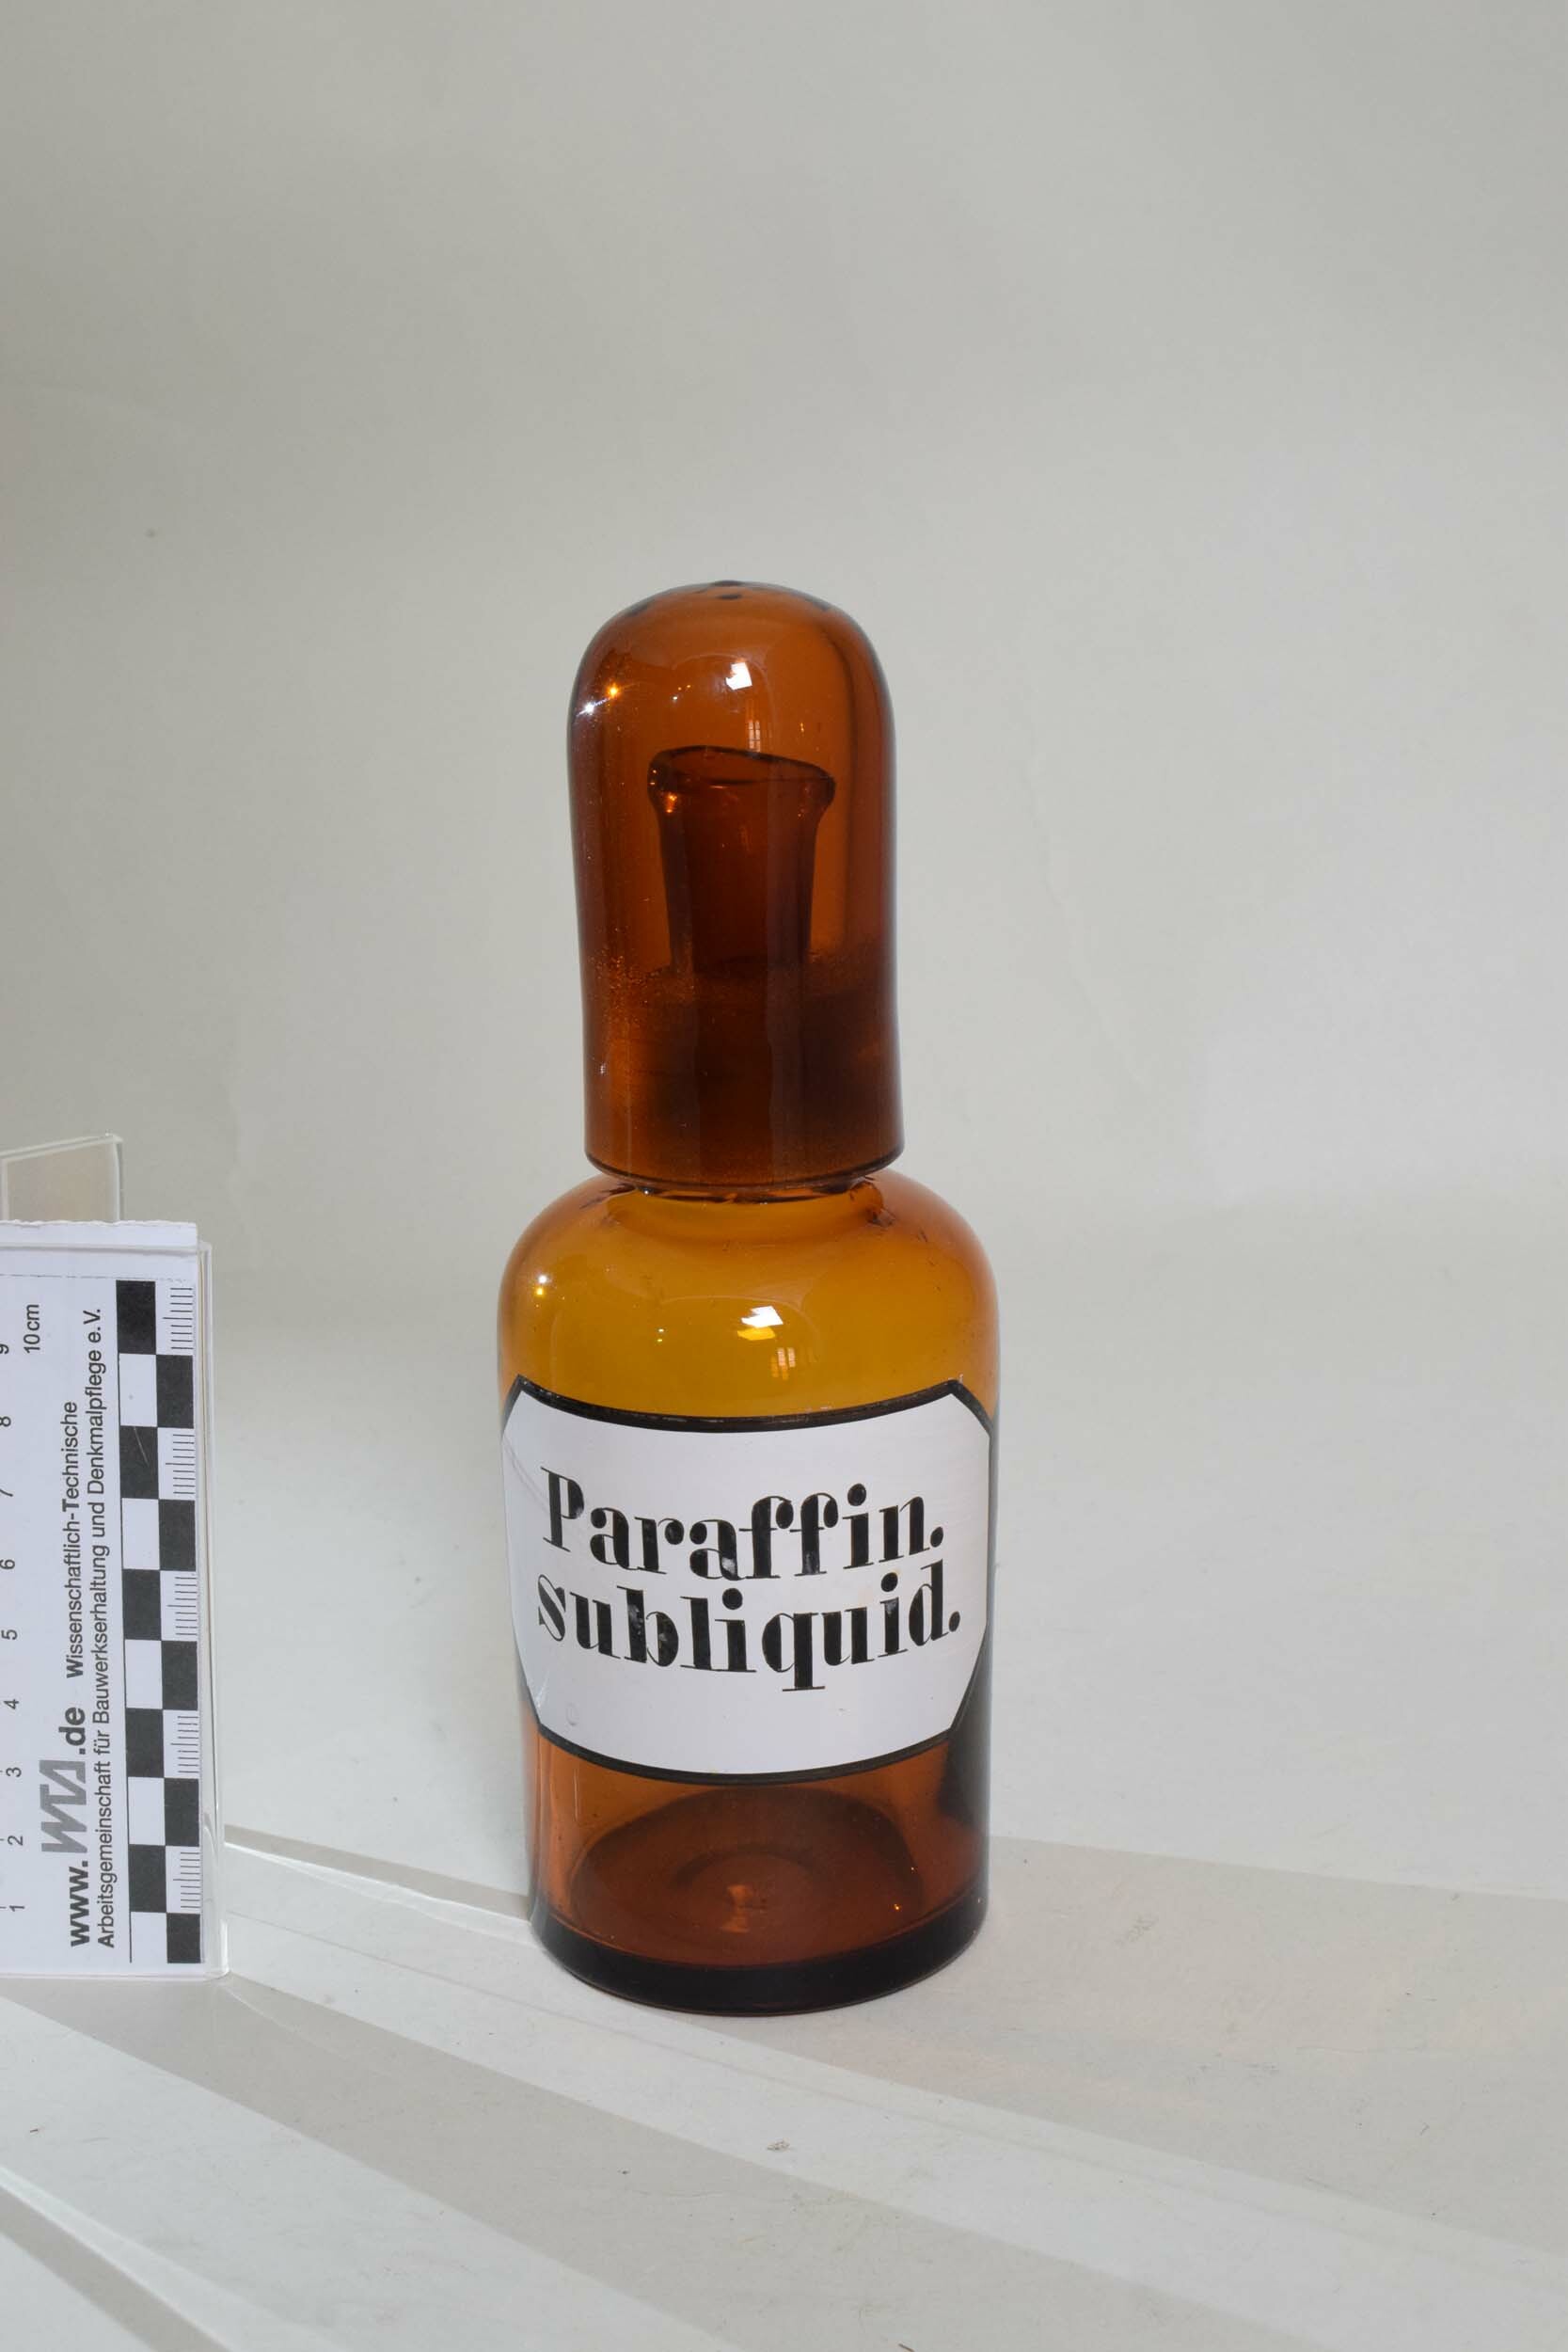 Apothekenflasche "Paraffin. subliquid." (Heimatmuseum Dohna CC BY-NC-SA)